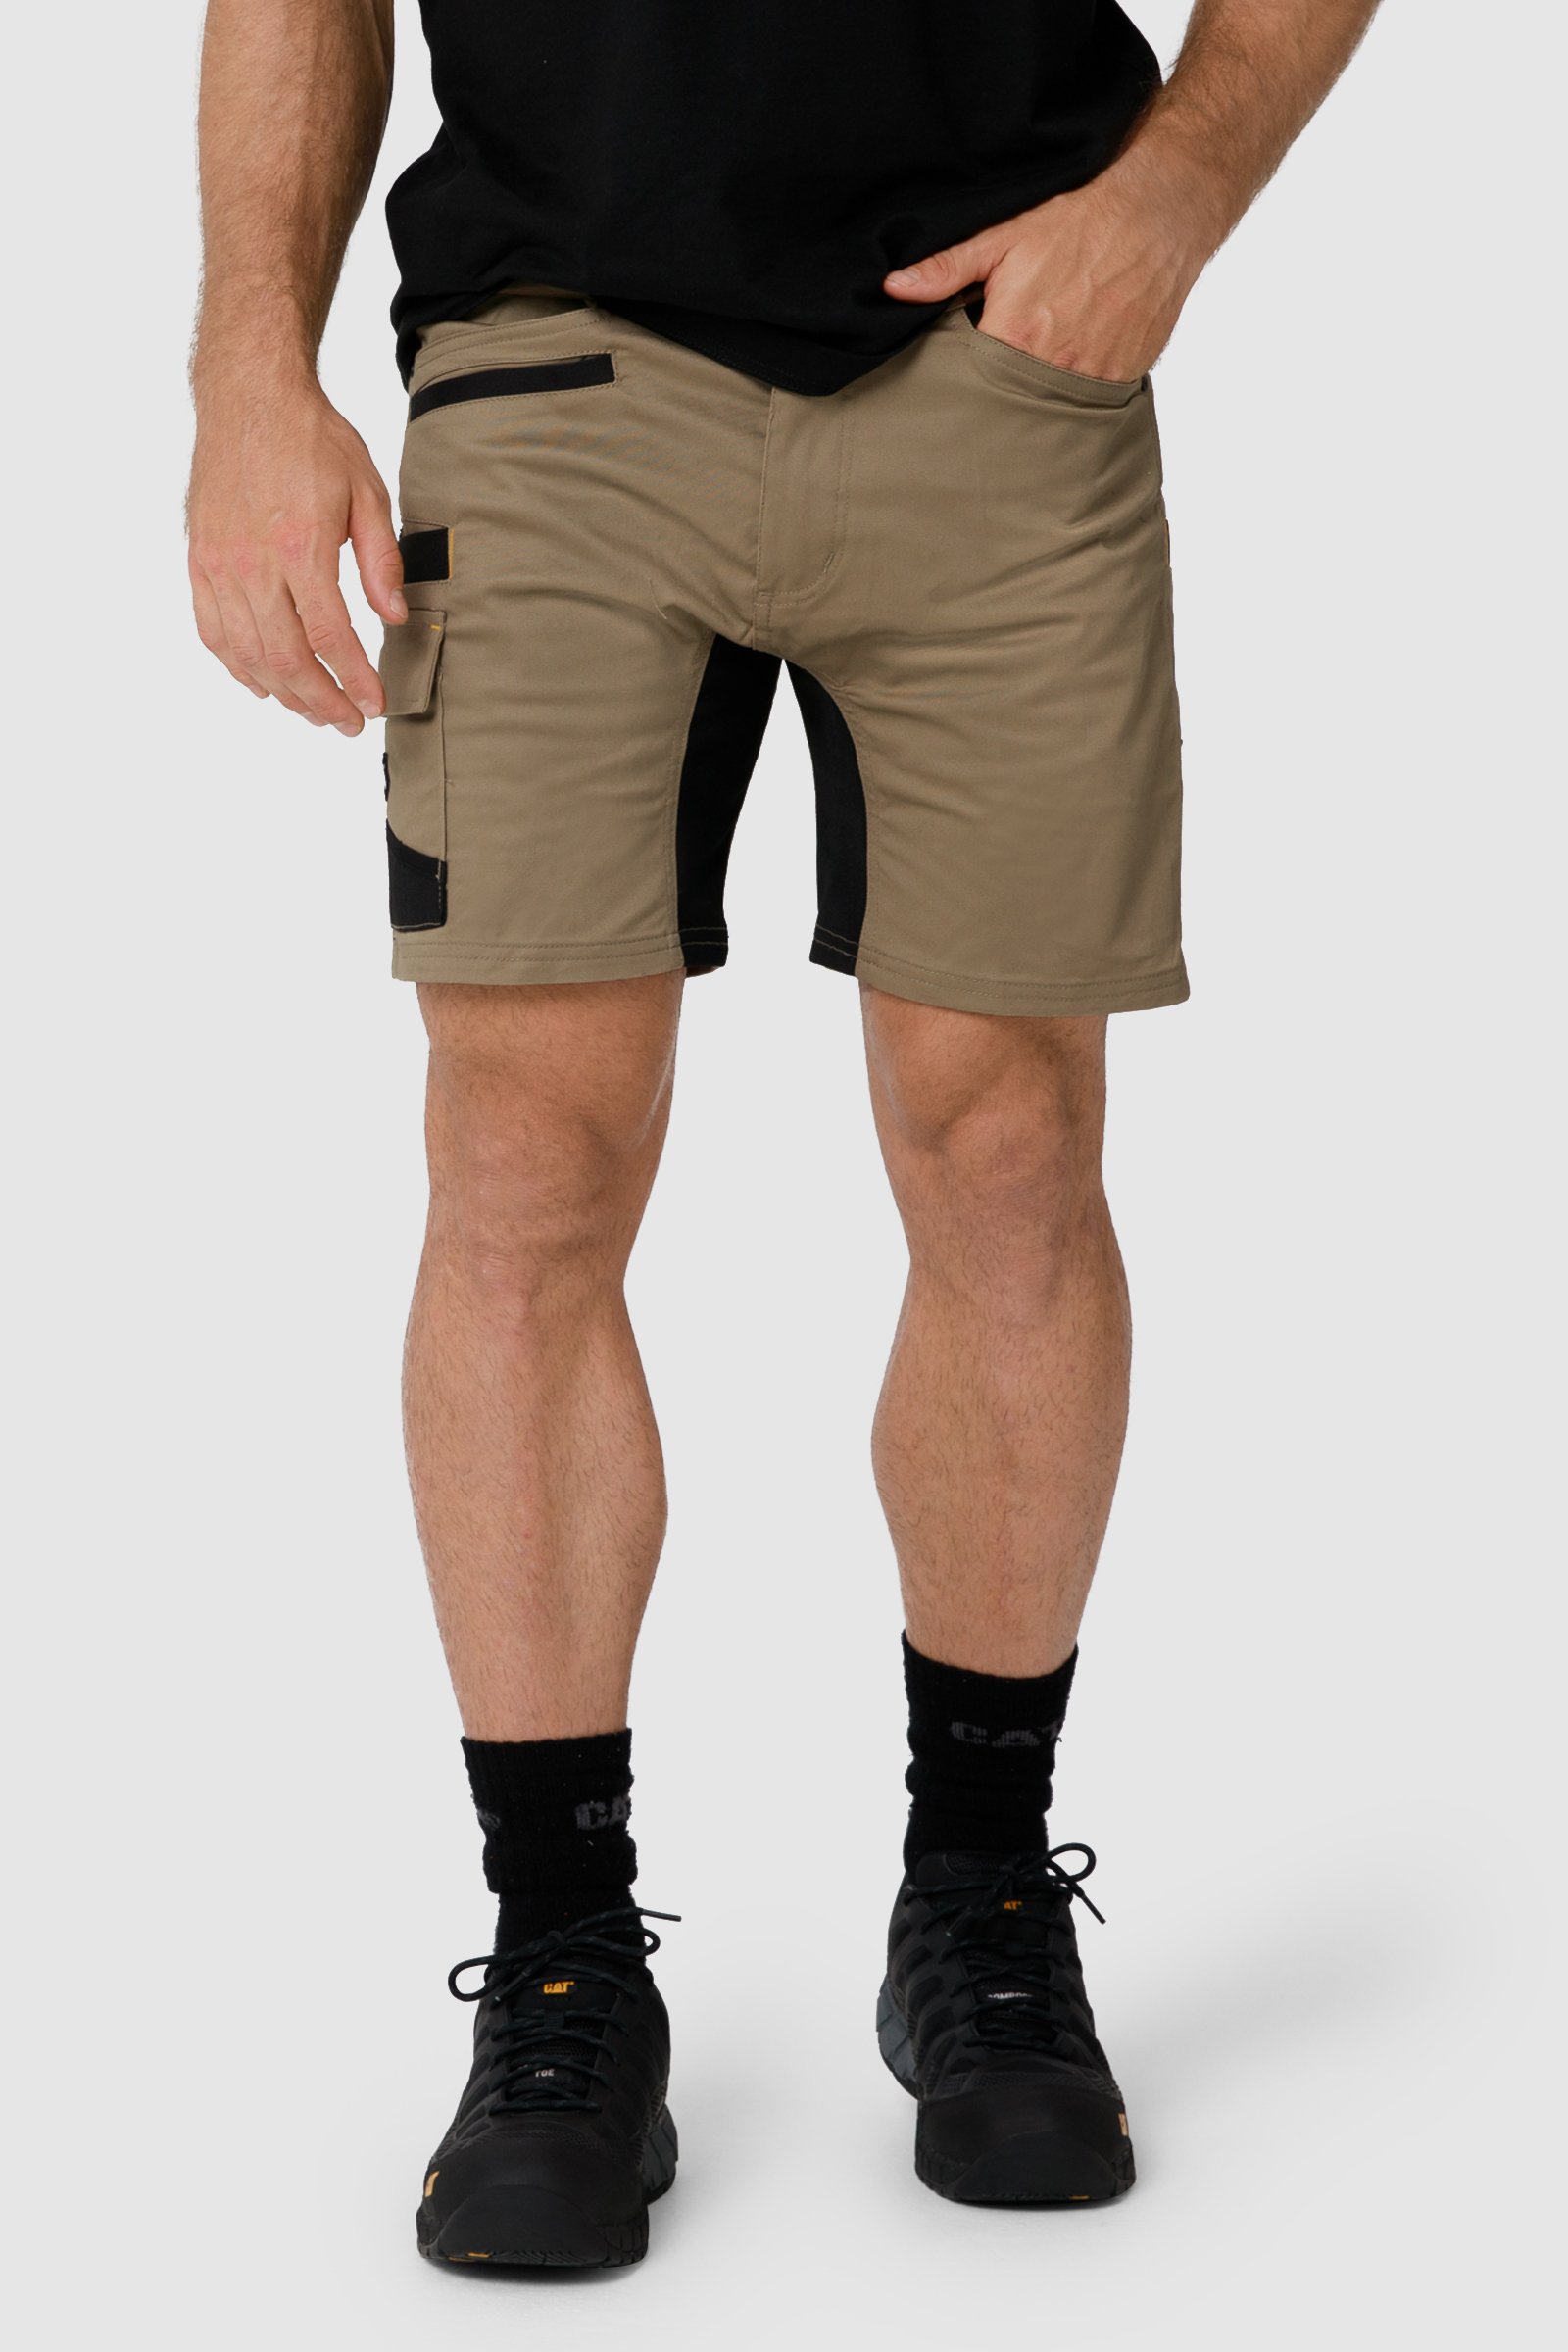 Men's New Arrivals: Pants & Shorts - Shop Online